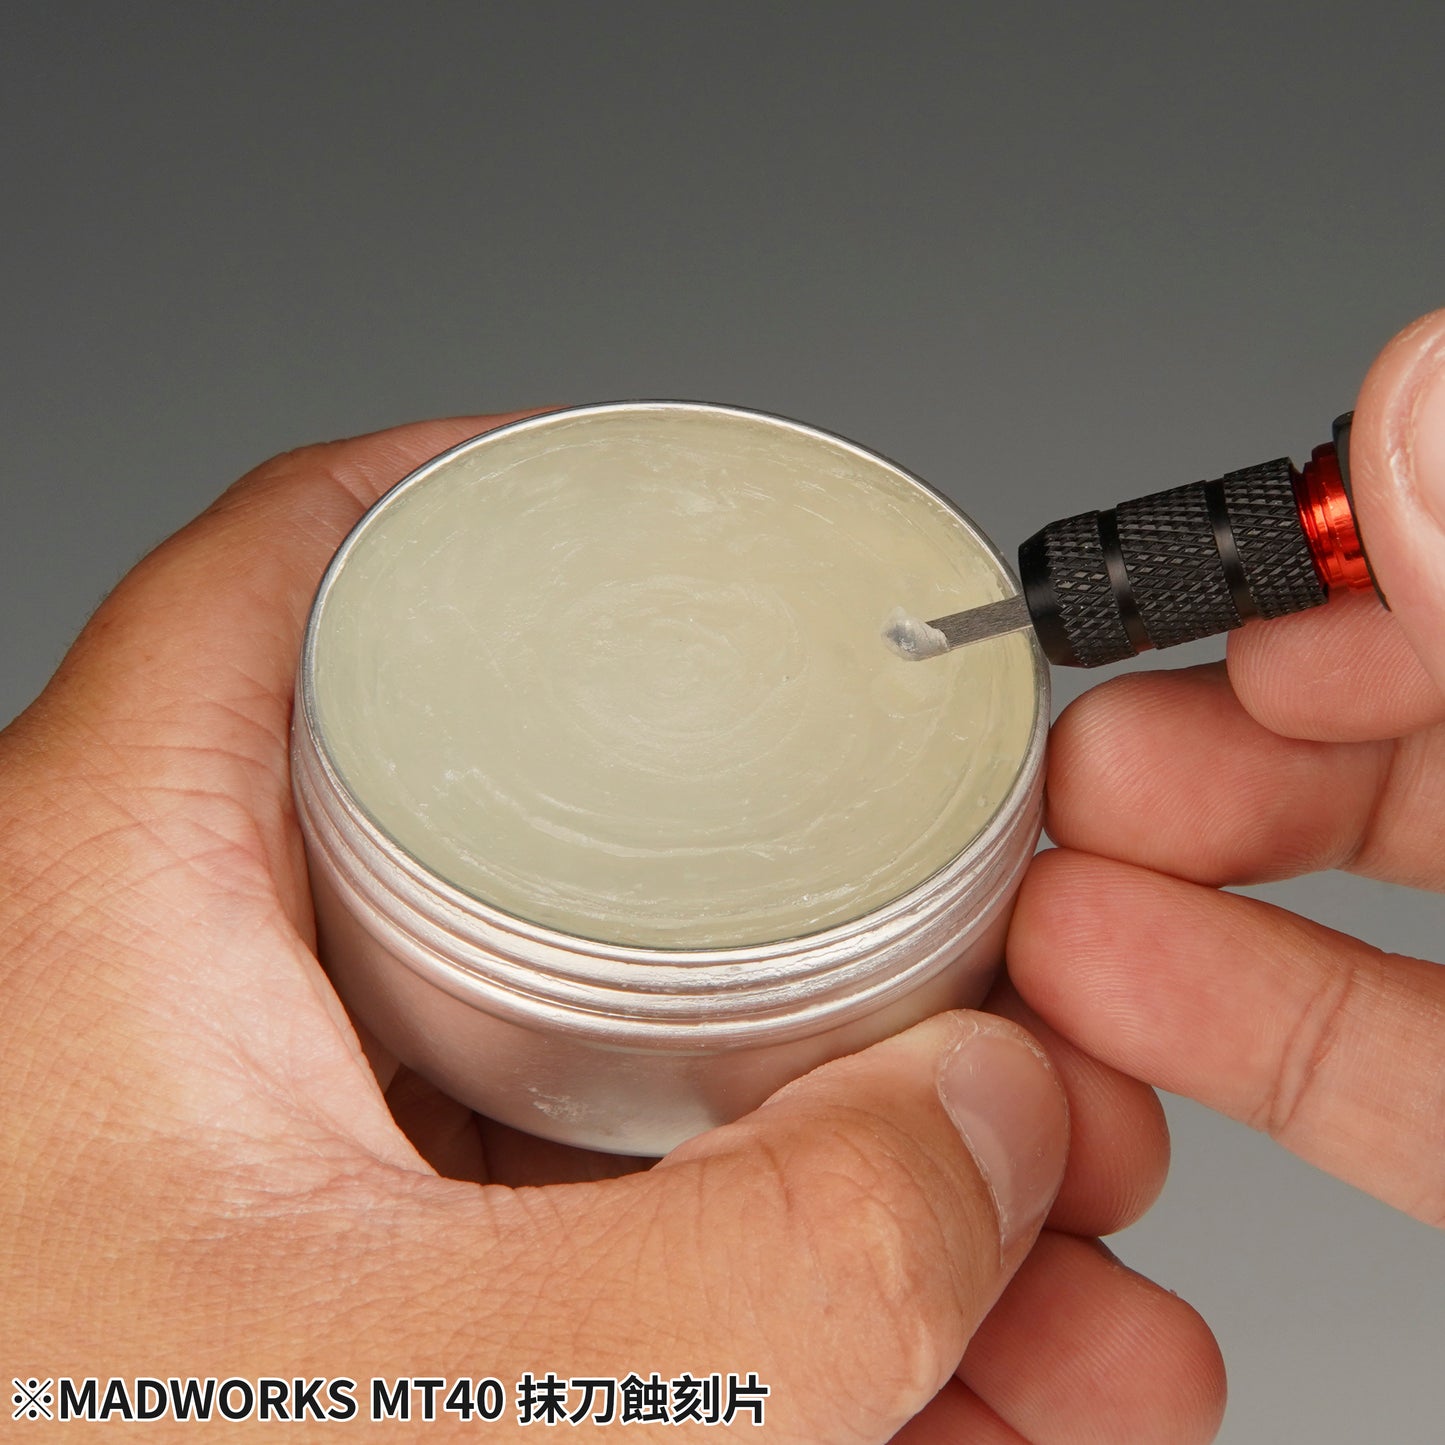 Madworks MT40 Photo-etched Mini Palette Blades